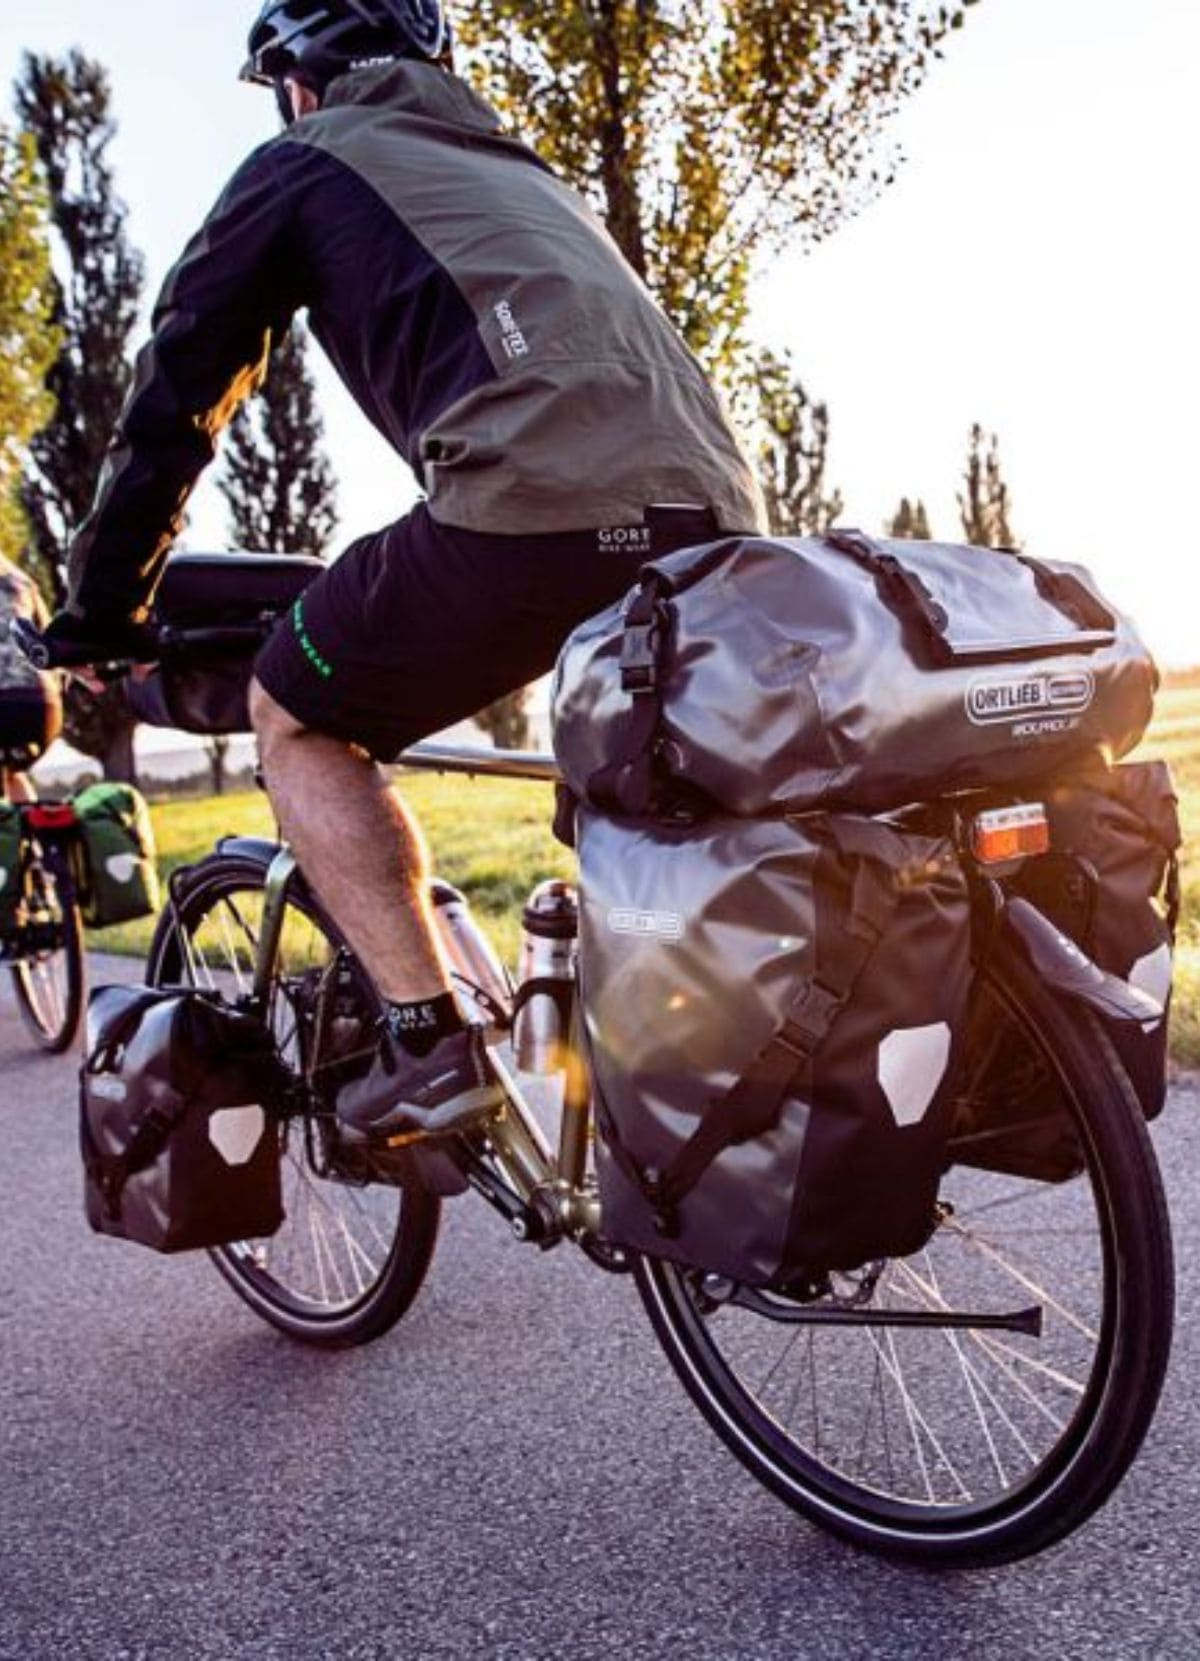 Voyage à vélo : remorque ou sacoche ?